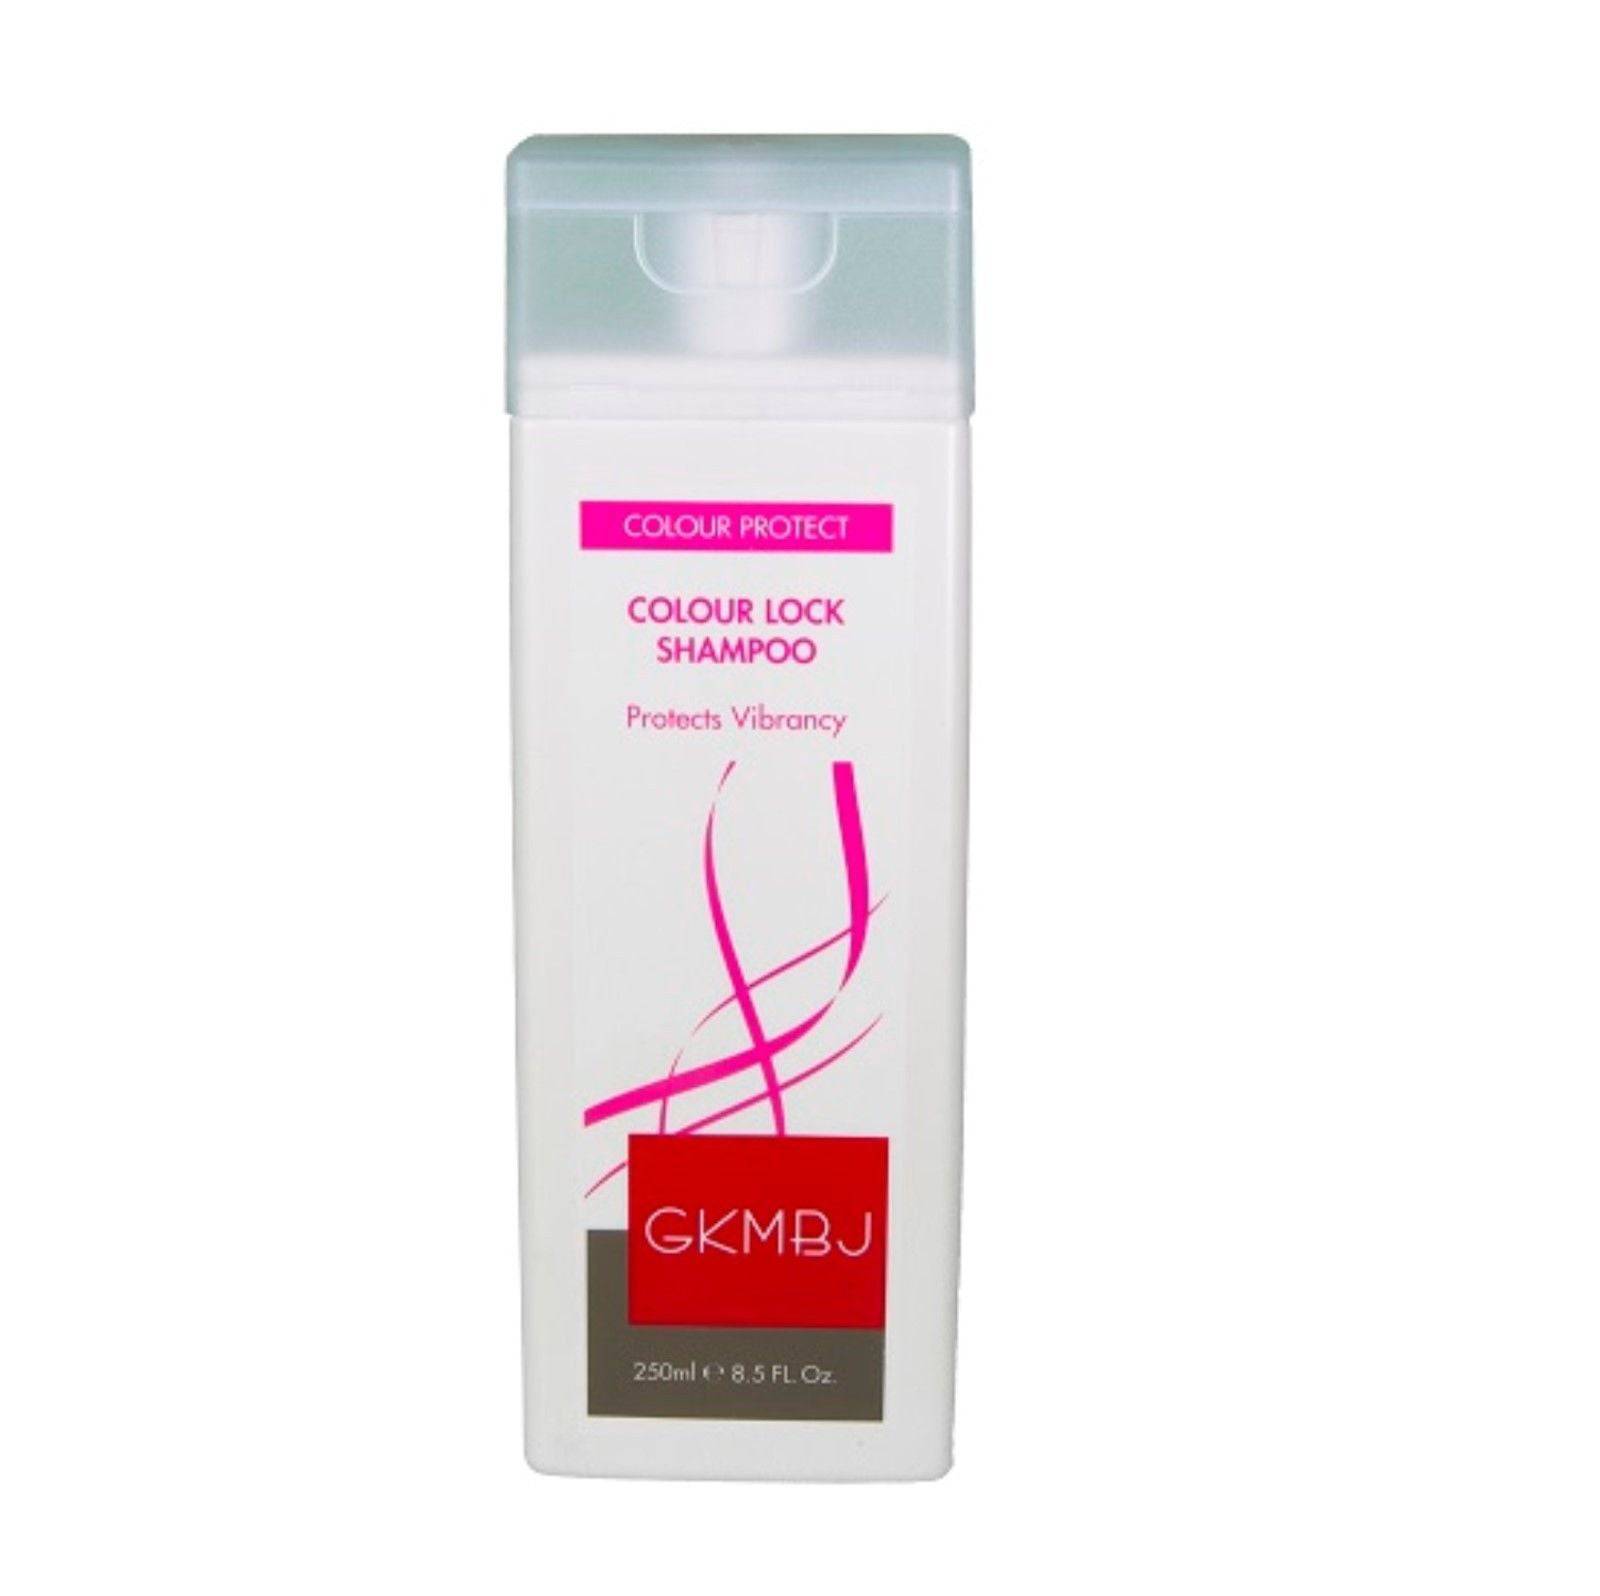 GKMBJ Colour Lock Shampoo 250ml  Protects Vibrancy - On Line Hair Depot